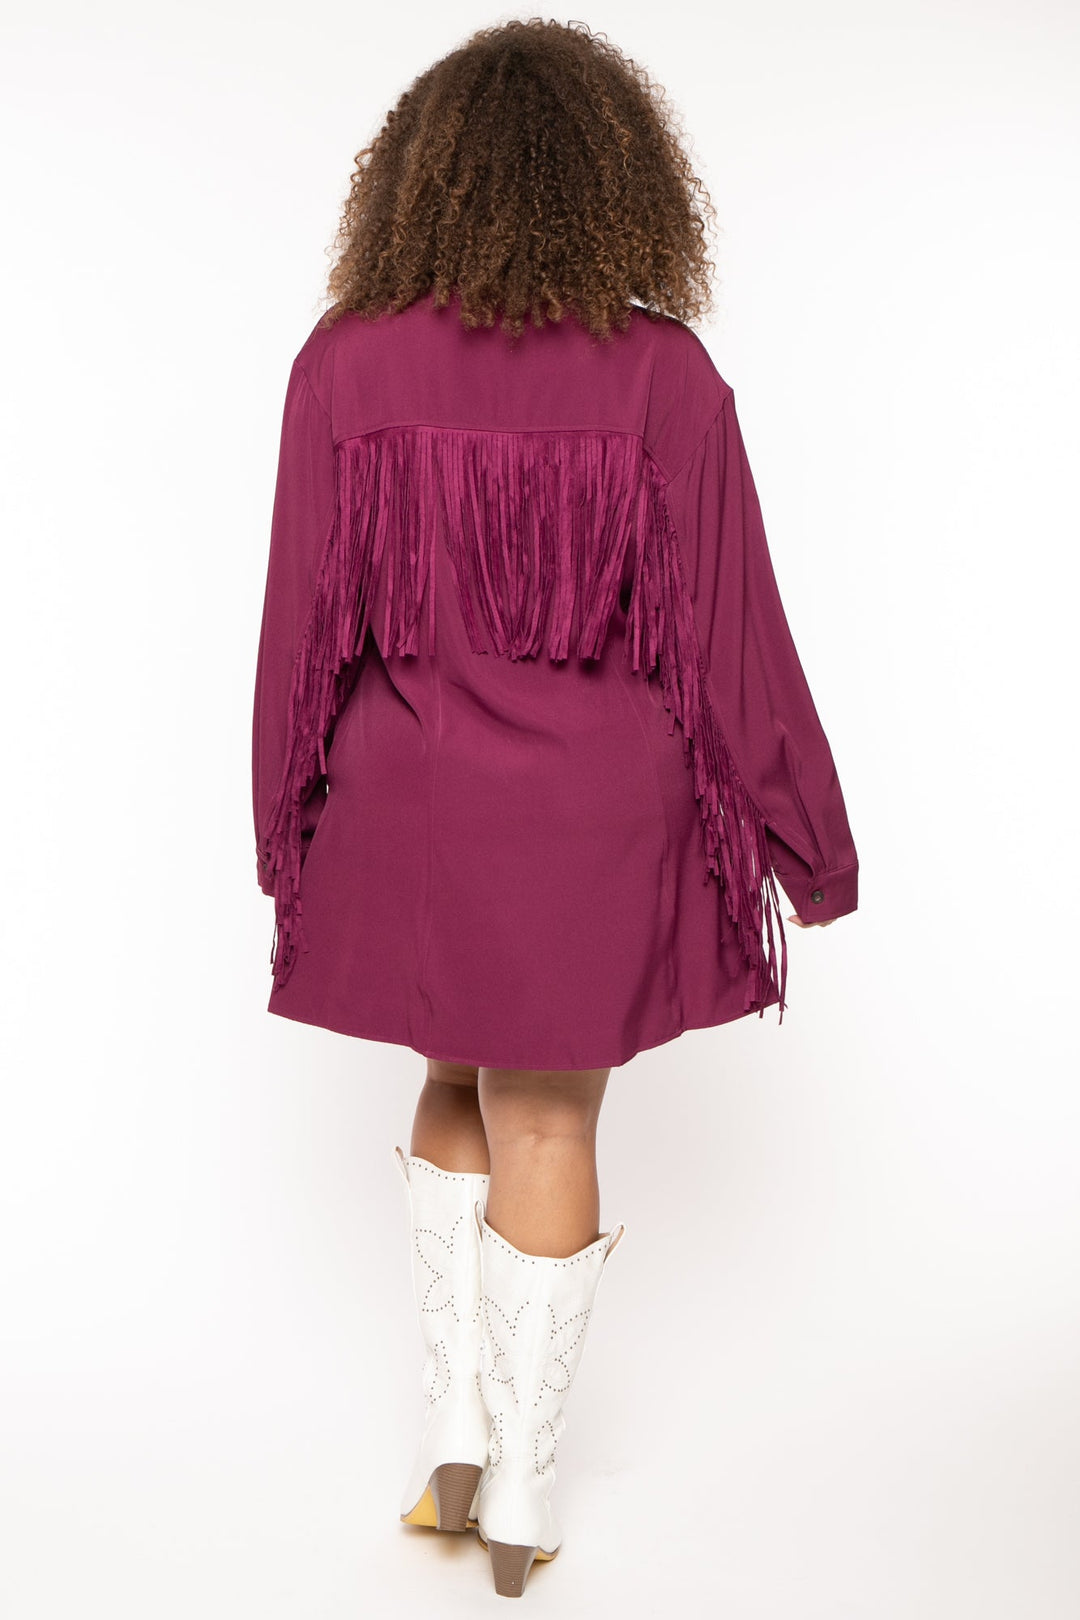 Jade By Jane Dresses Plus Size Sonya  Fringe  Shirt Dress - Plum